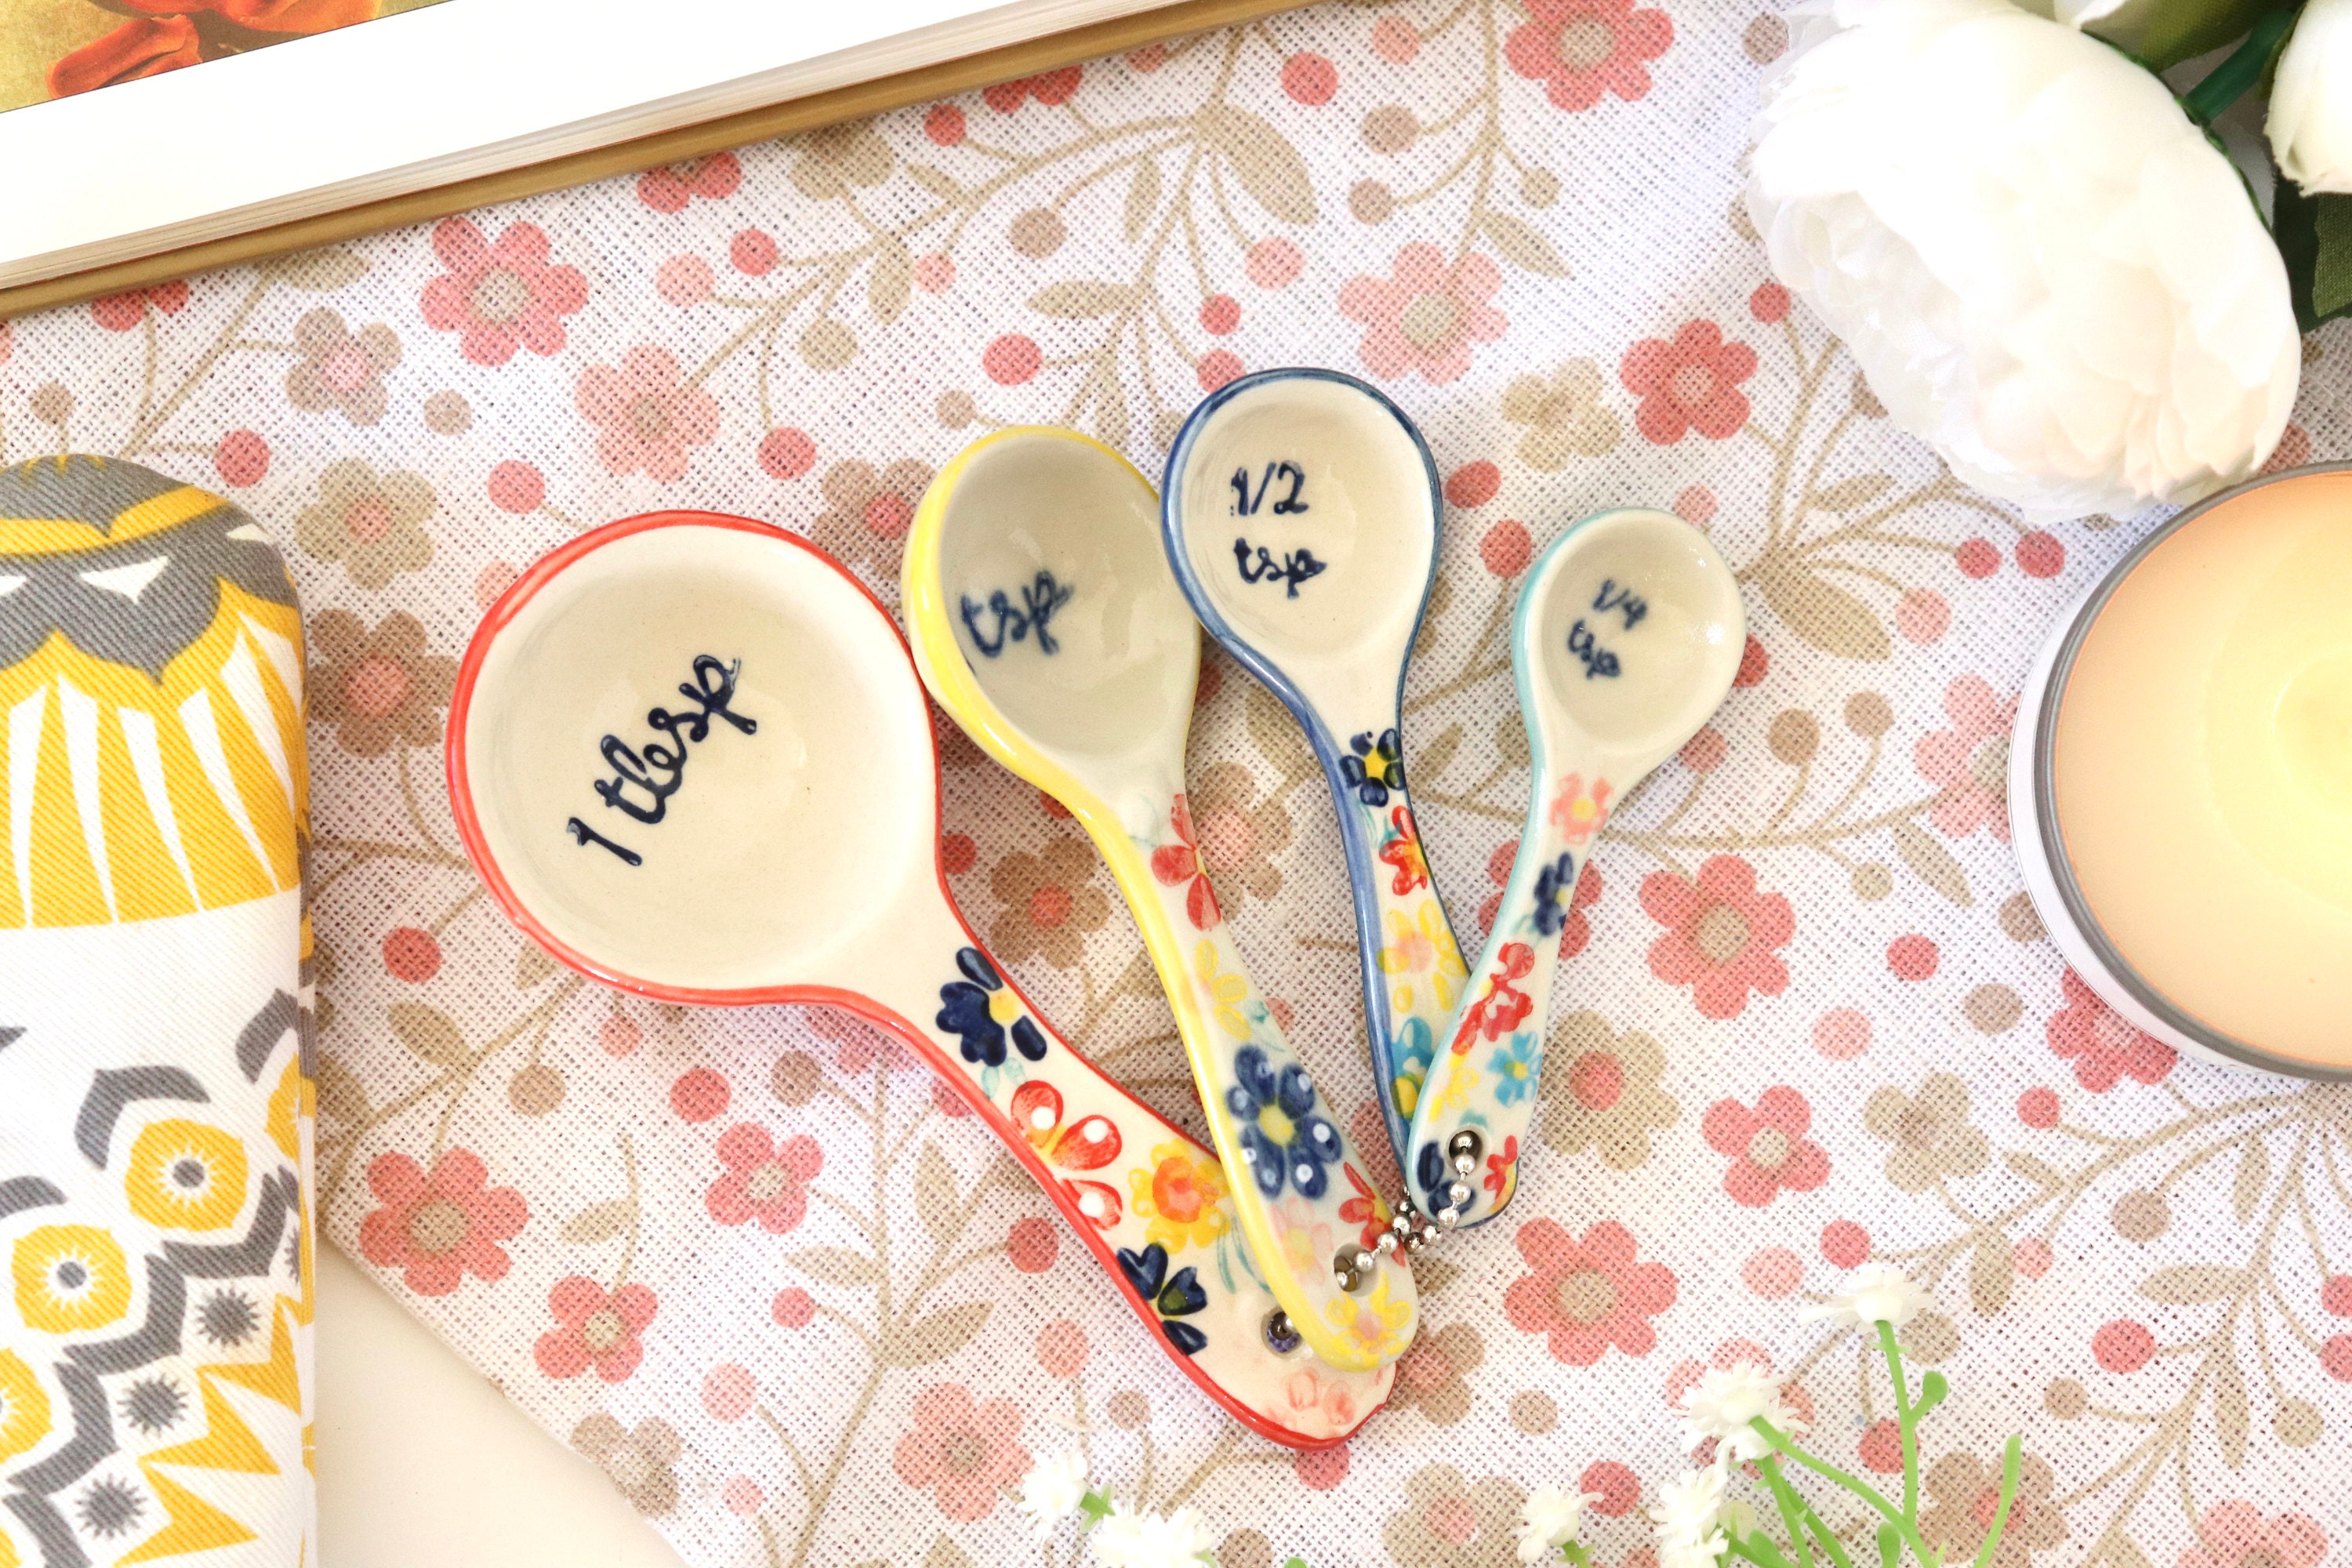 Wooden Measuring Spoons – Creating Smaller Footprints